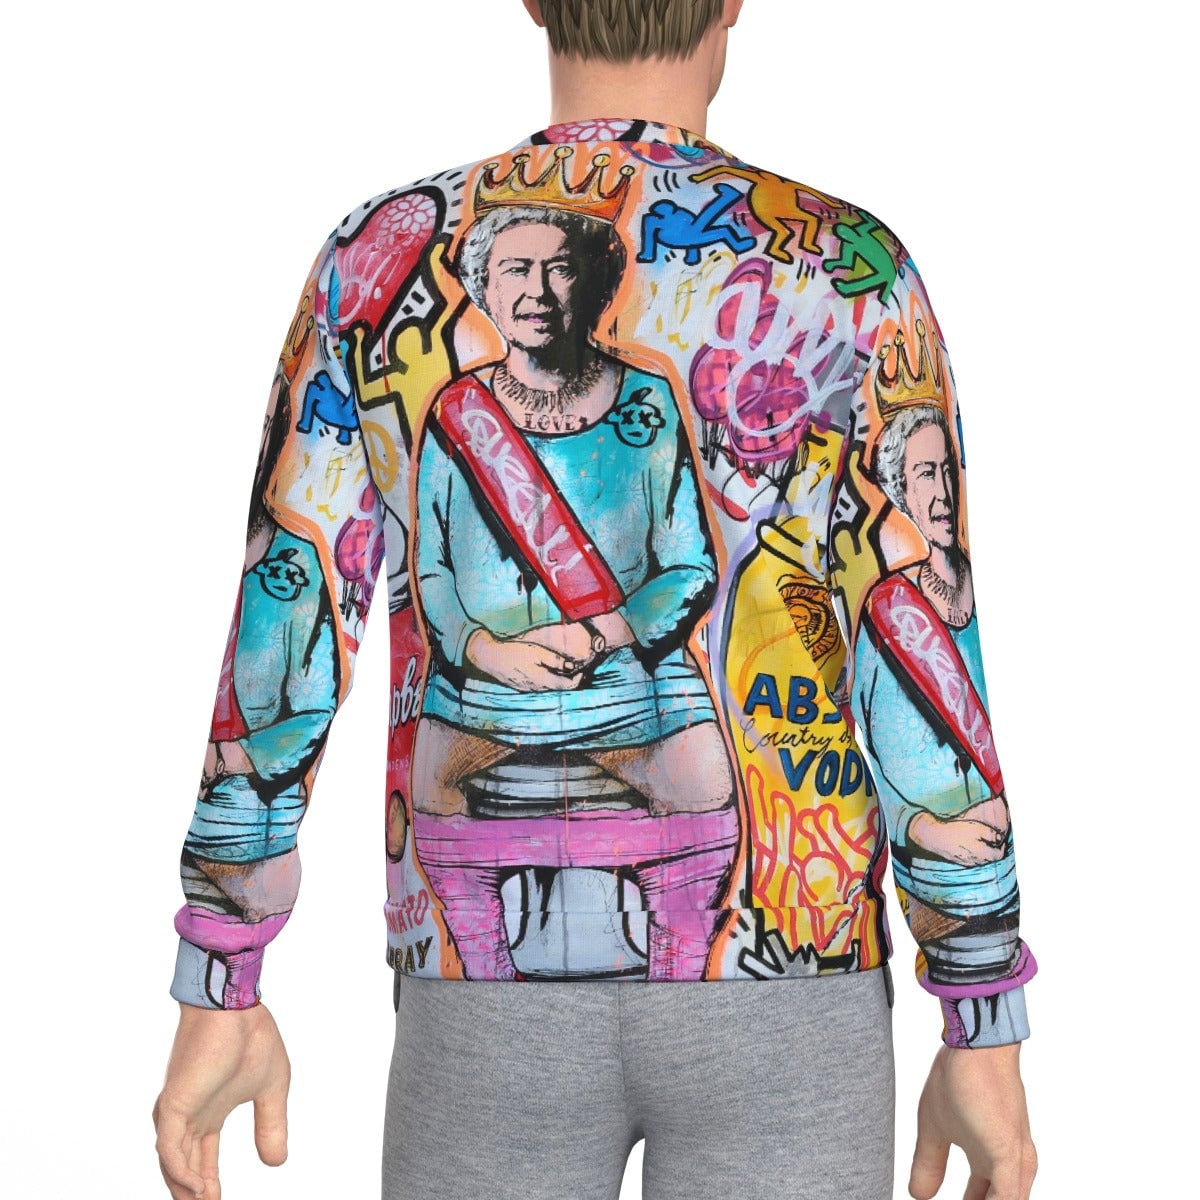 Iconic British Royal Pop Art Surrealism Collage Sweatshirt